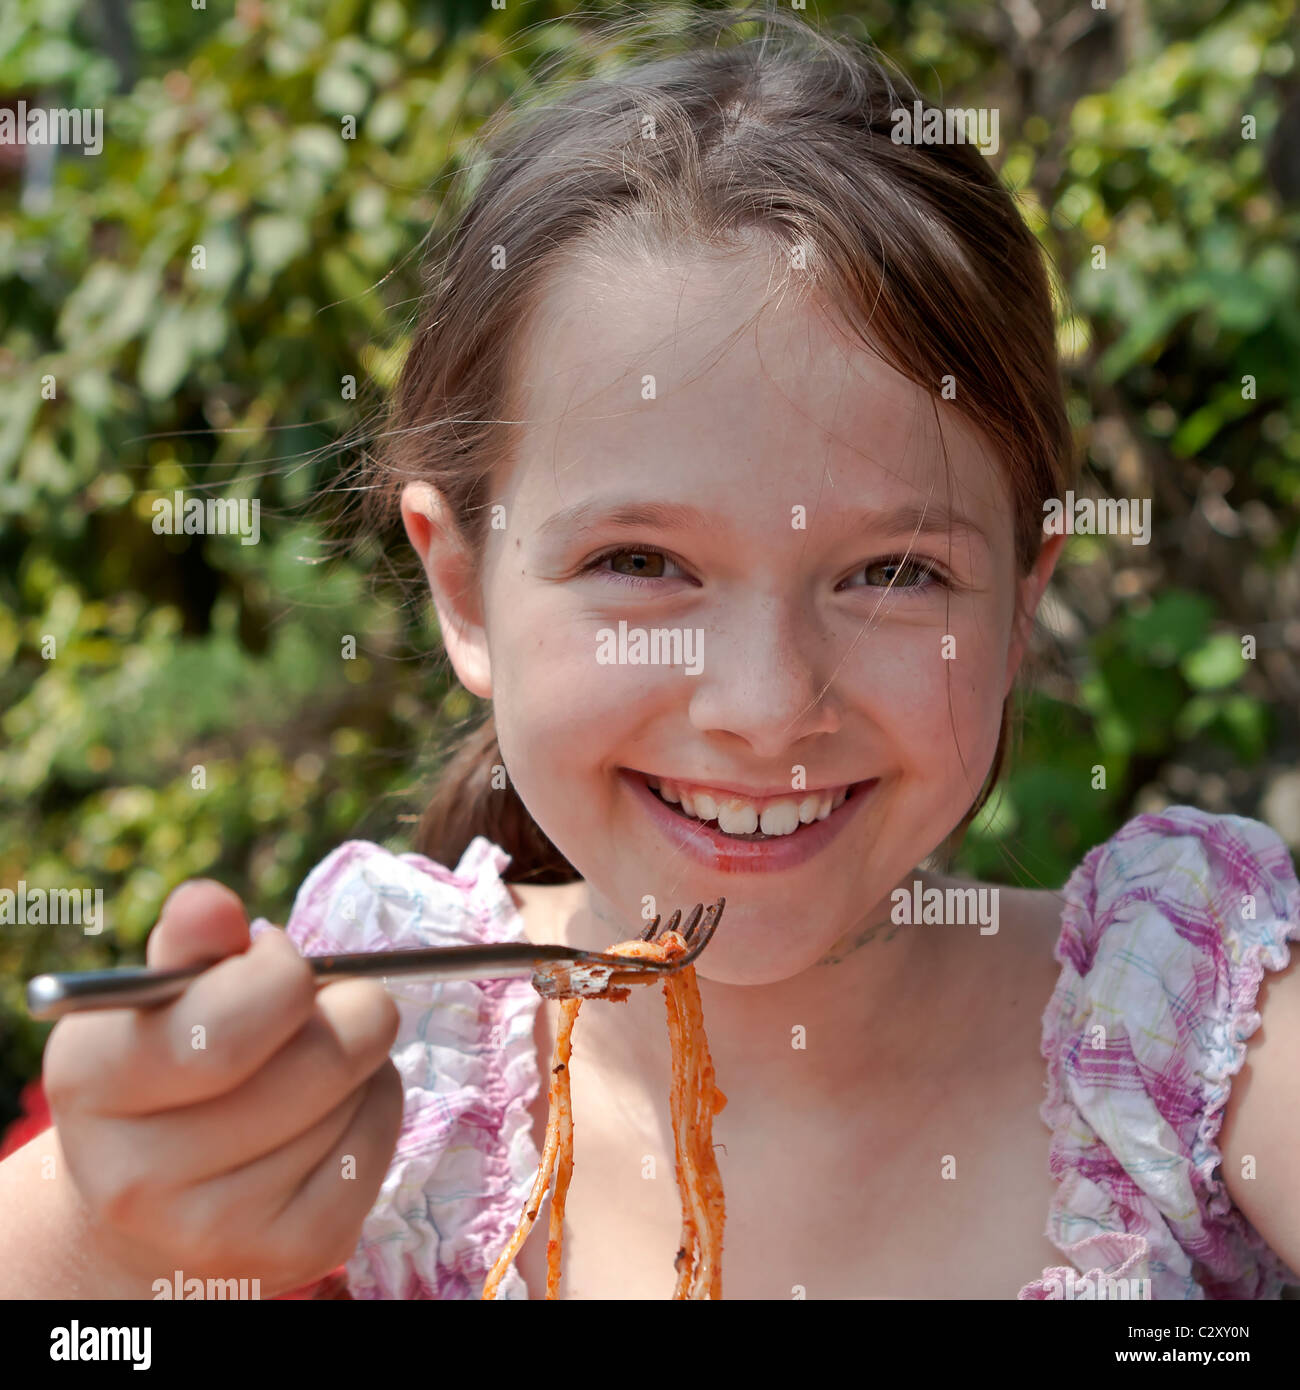 girl is eating spaghetti Stock Photo